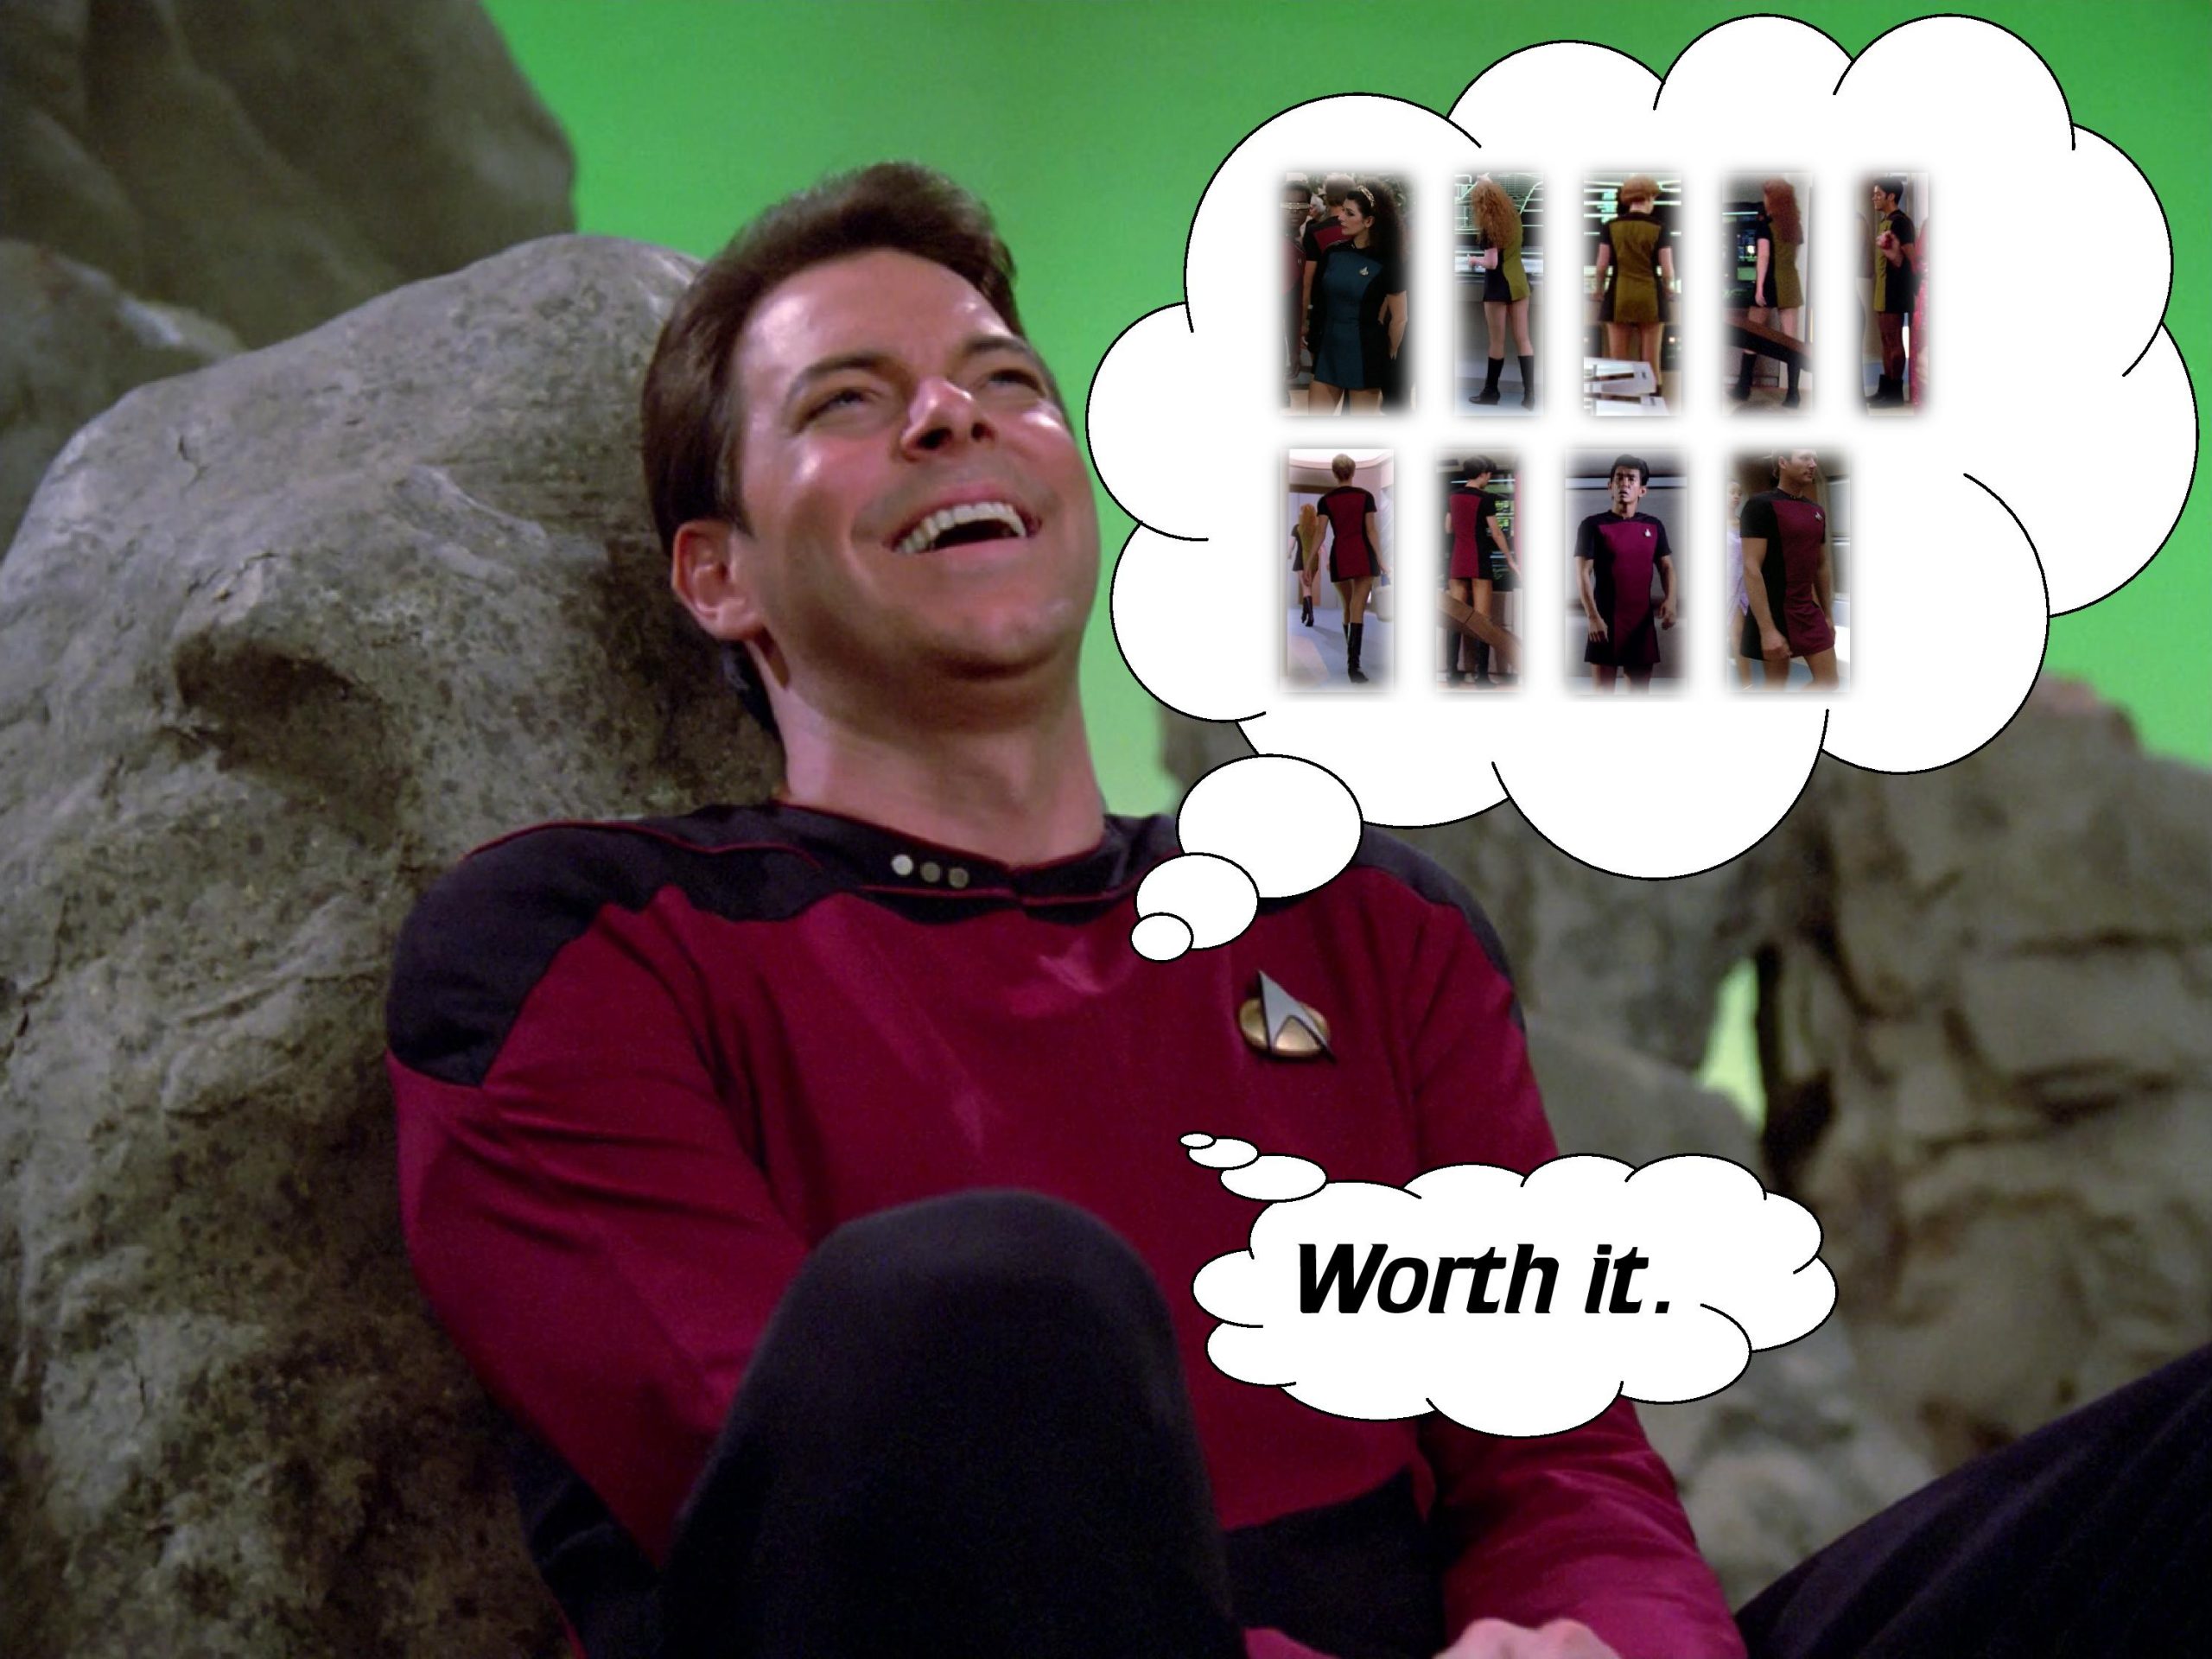 TNG skant theory - Star Trek Costume Guide